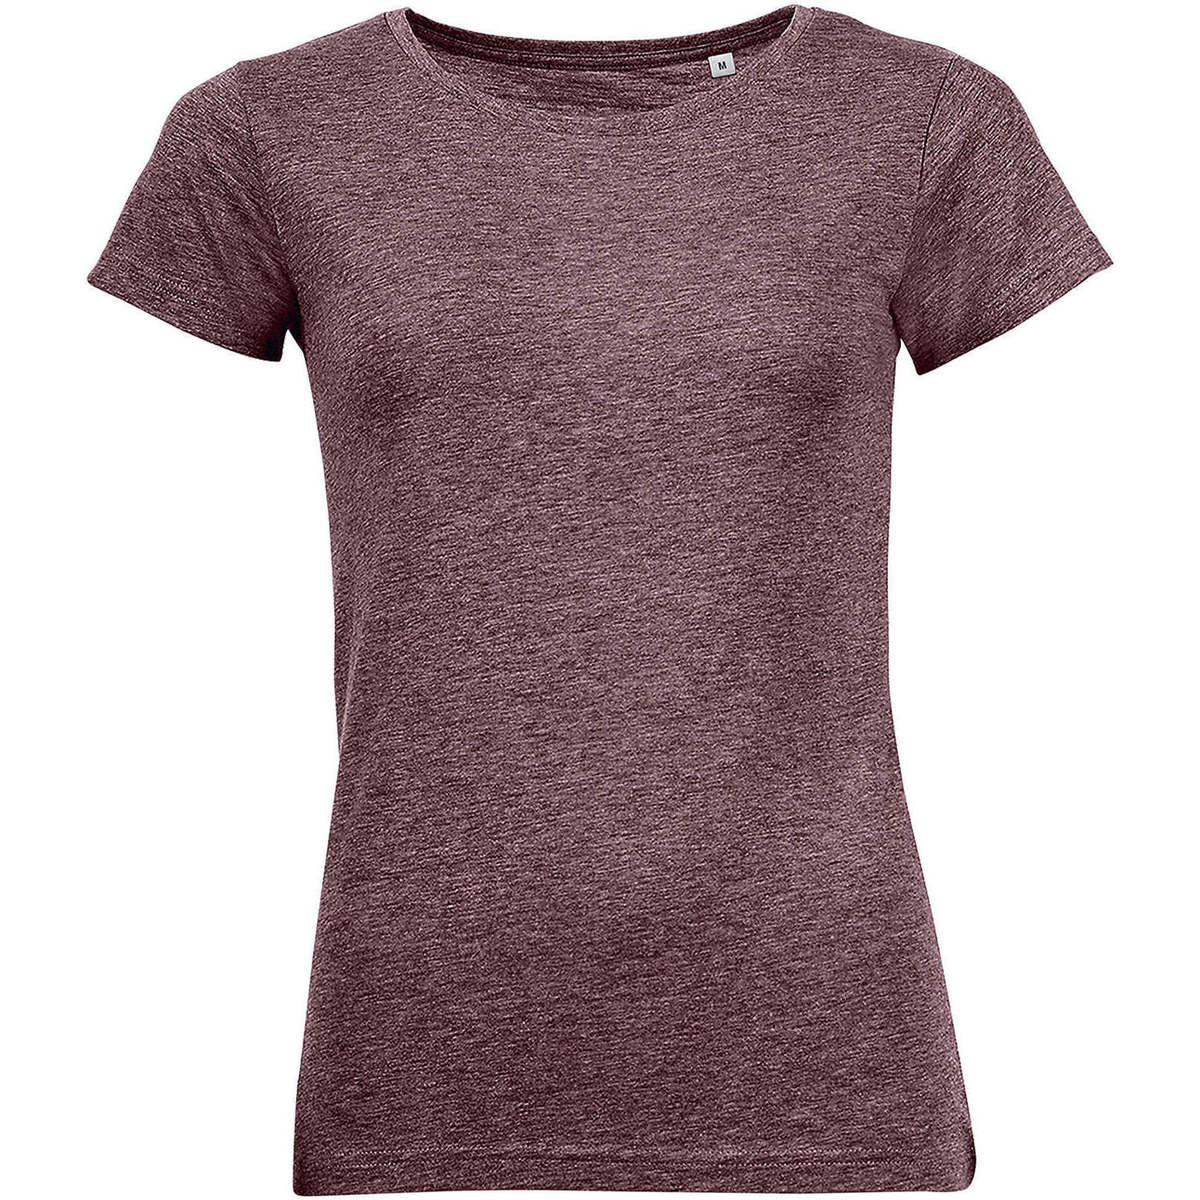 Textiel Dames T-shirts korte mouwen Sols Mixed Women camiseta mujer Bordeau